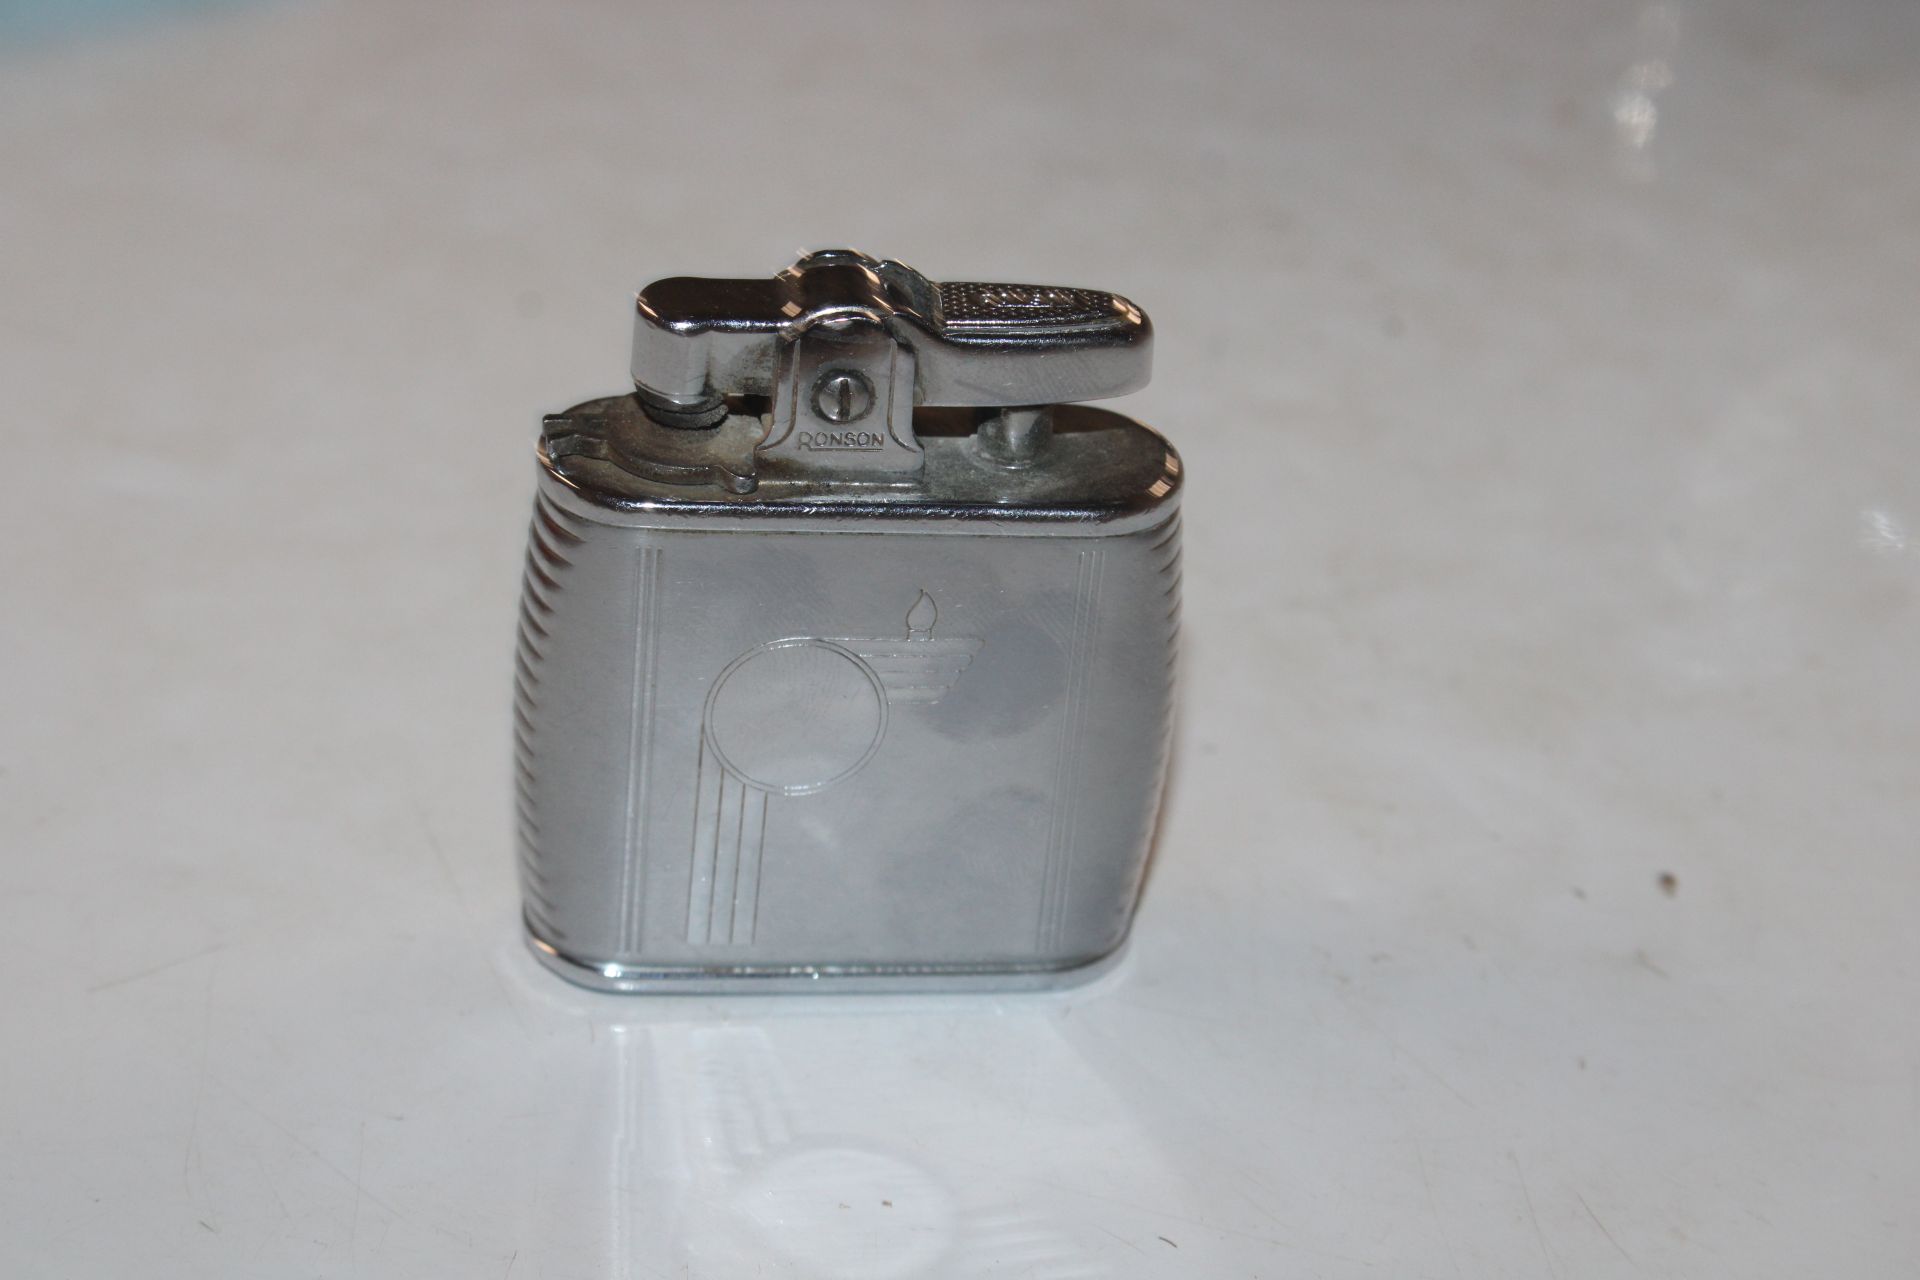 A box containing a Helios folding camera; a milita - Image 12 of 20